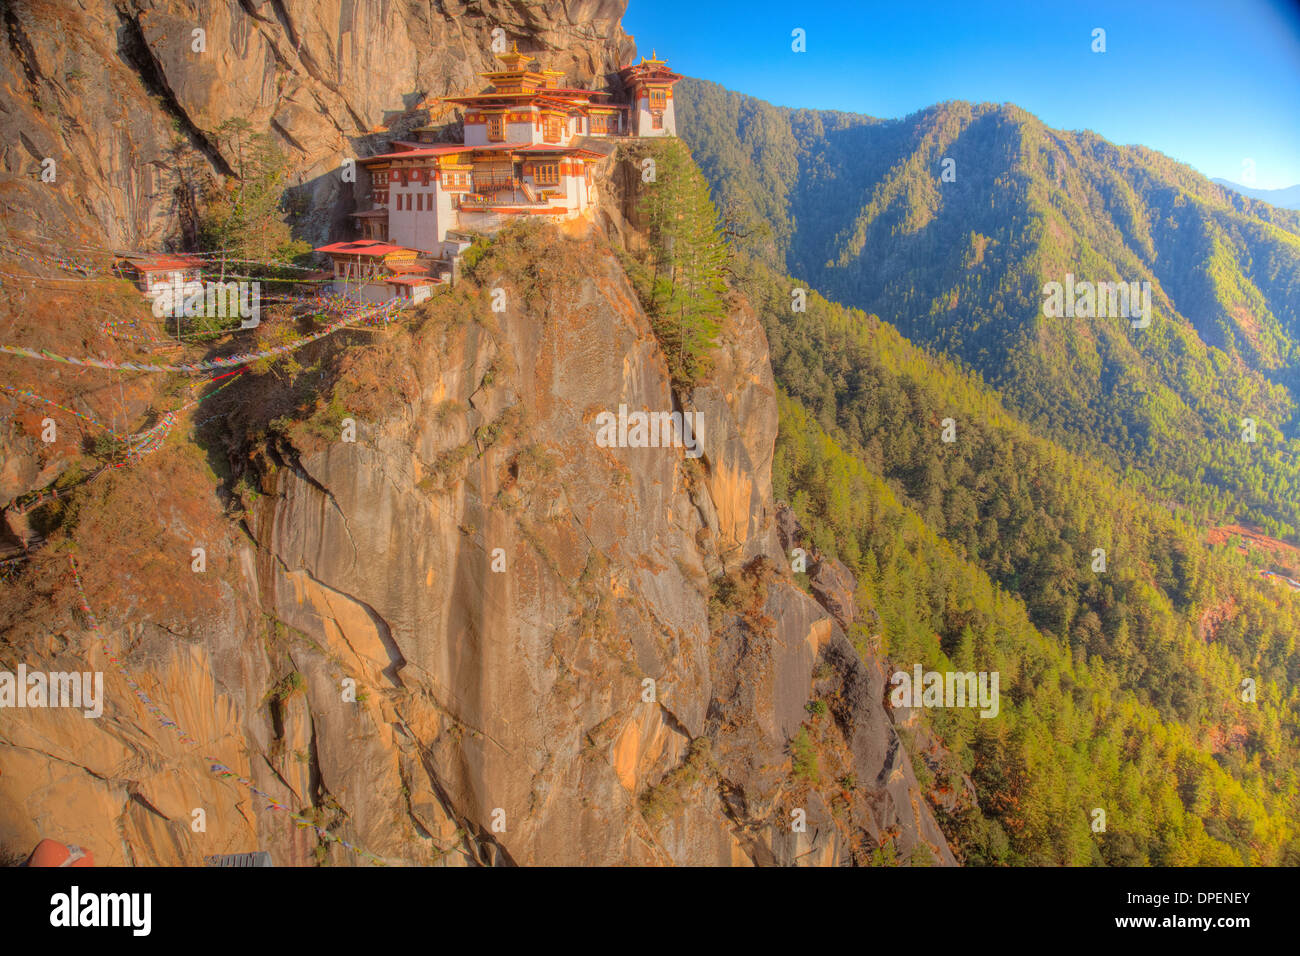 The Tigers Nest Monastery Bhutan, Himalaya Mountains, Paro Valley. Taktshang Goemba. Perched 3,000 feet above valley below Stock Photo